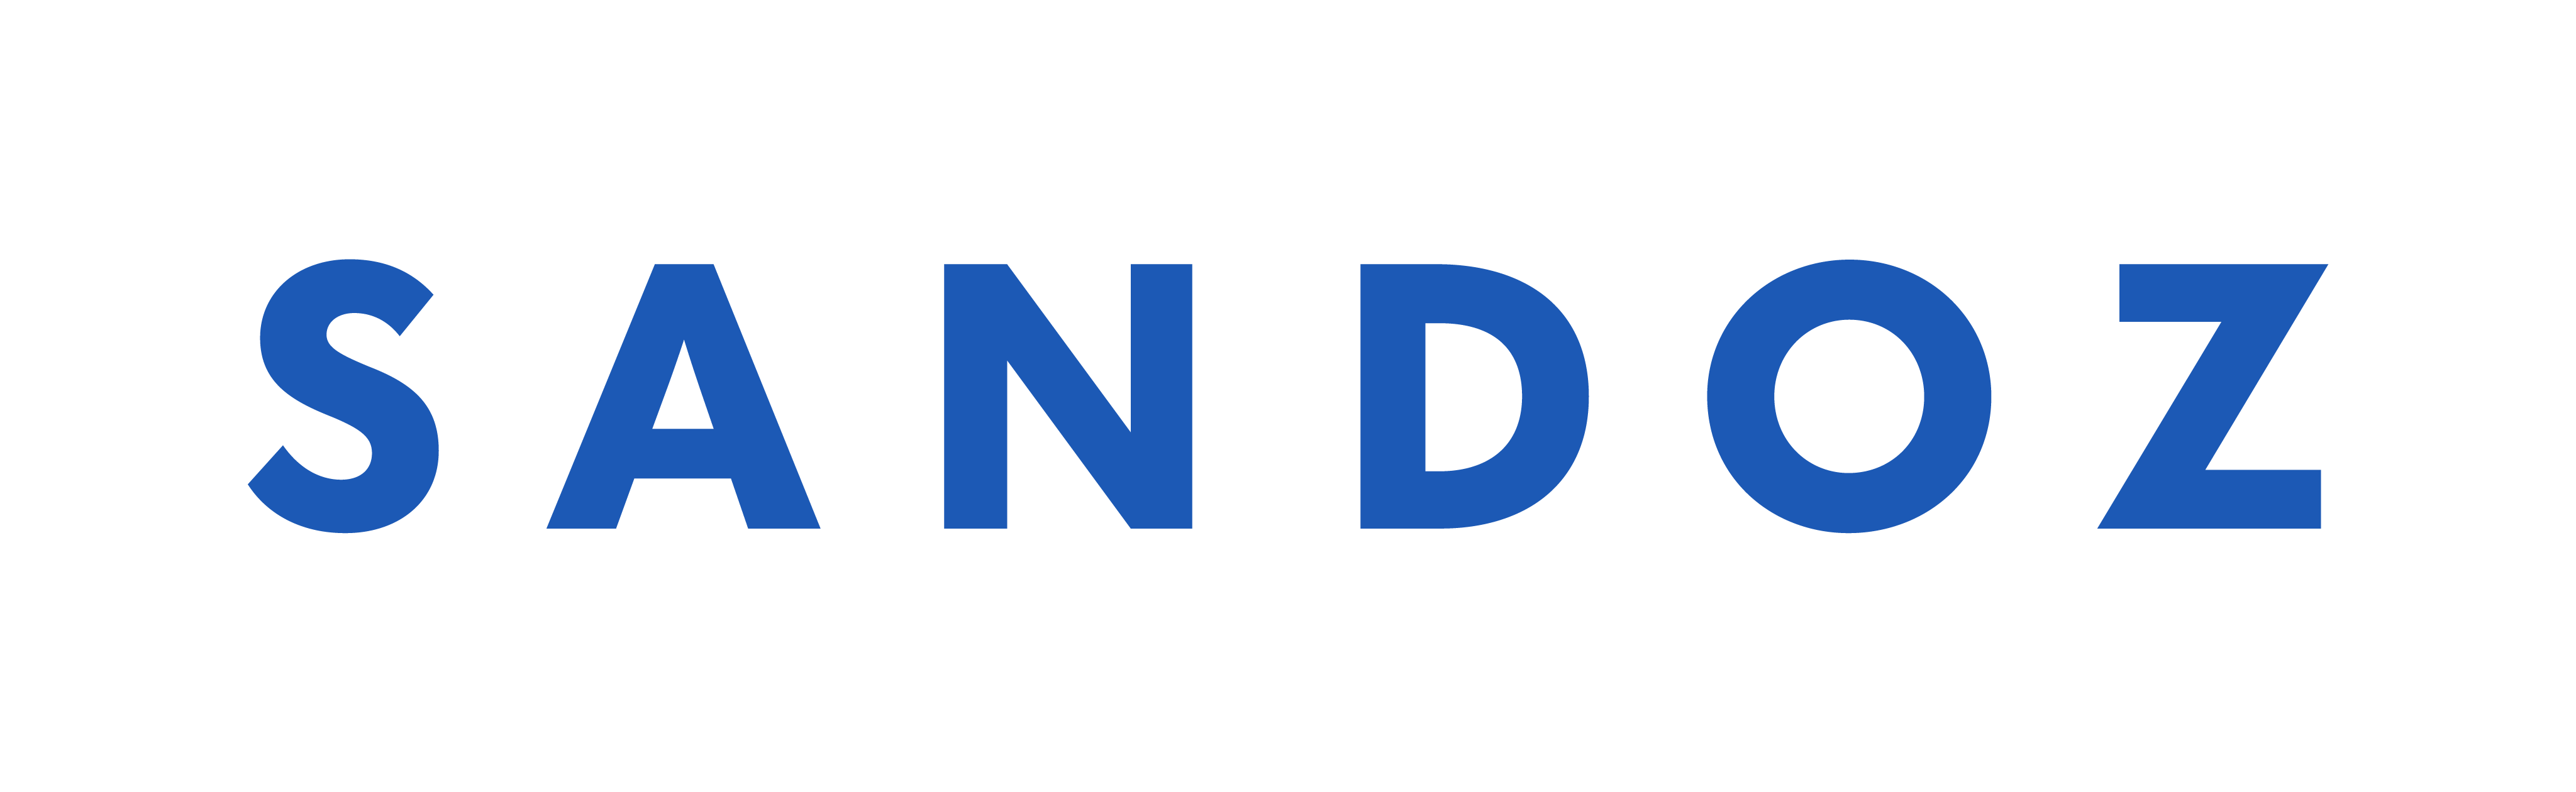 Sandoz-Logo-Sandoz-Blue-RGB.png